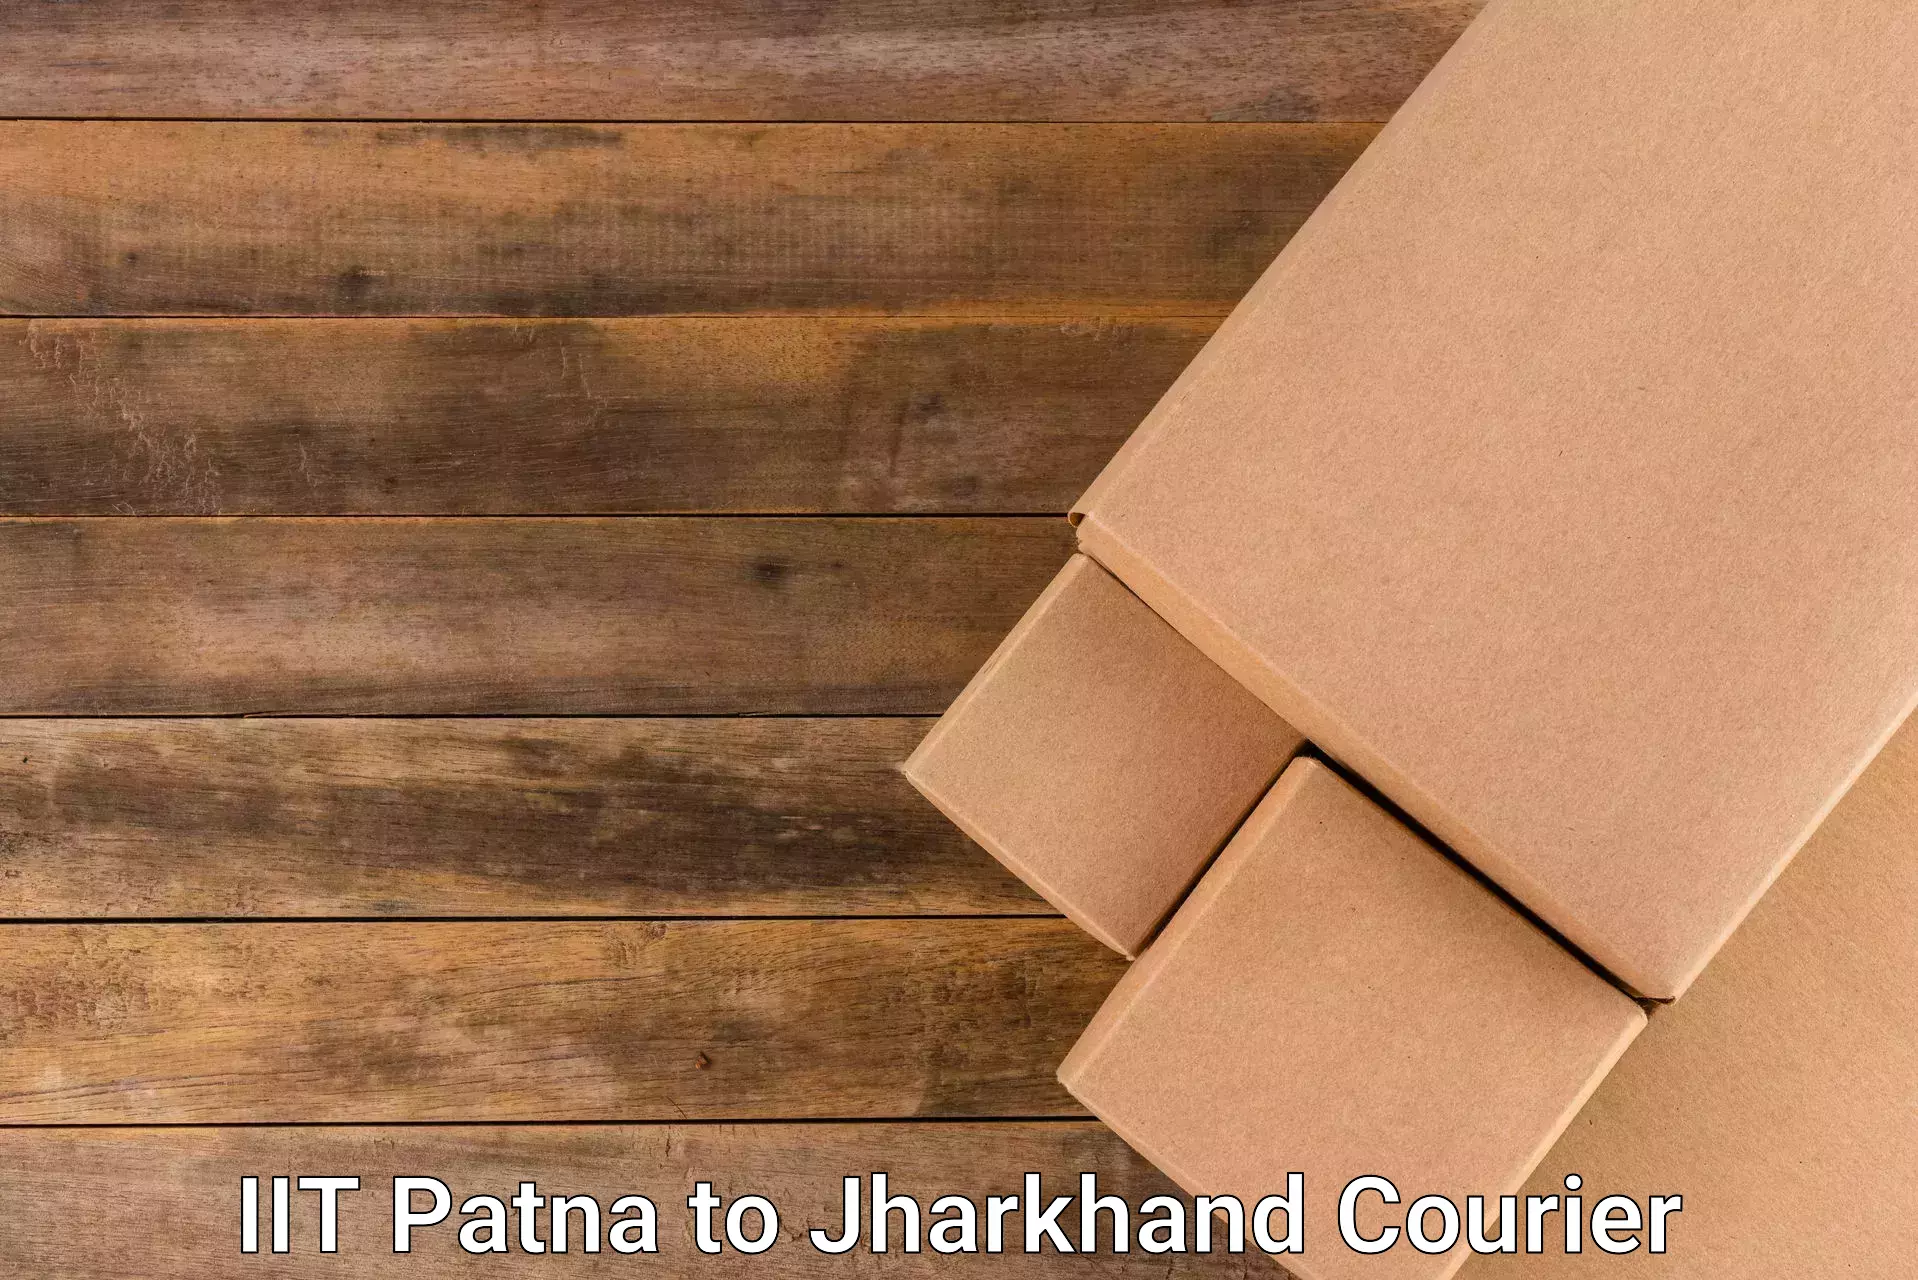 Express mail service IIT Patna to Jharkhand